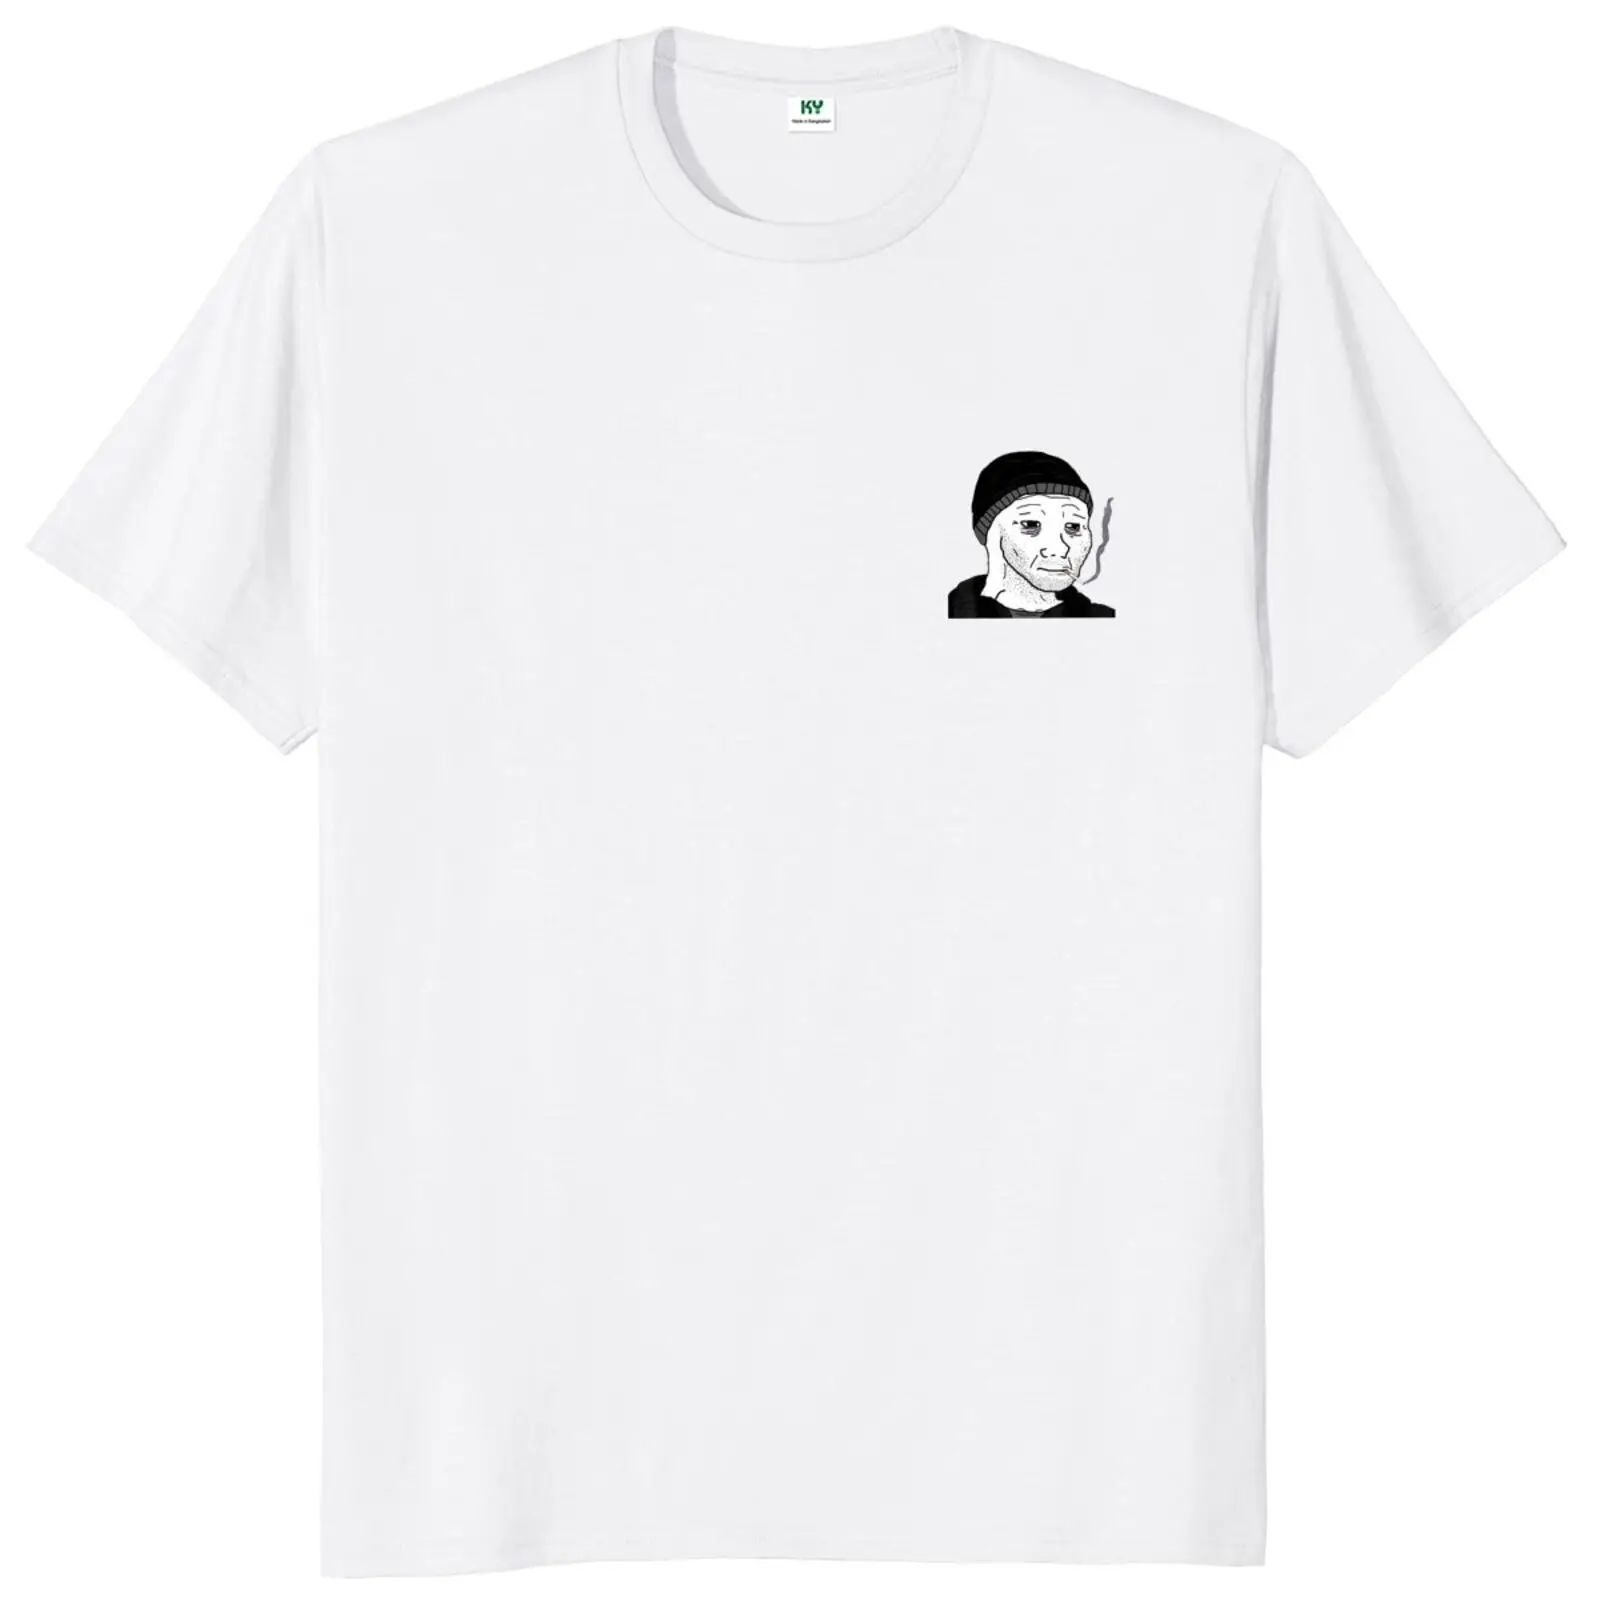 Doomer T Shirt Introverted Funny Meme Geek Nerd Humor Gift Short